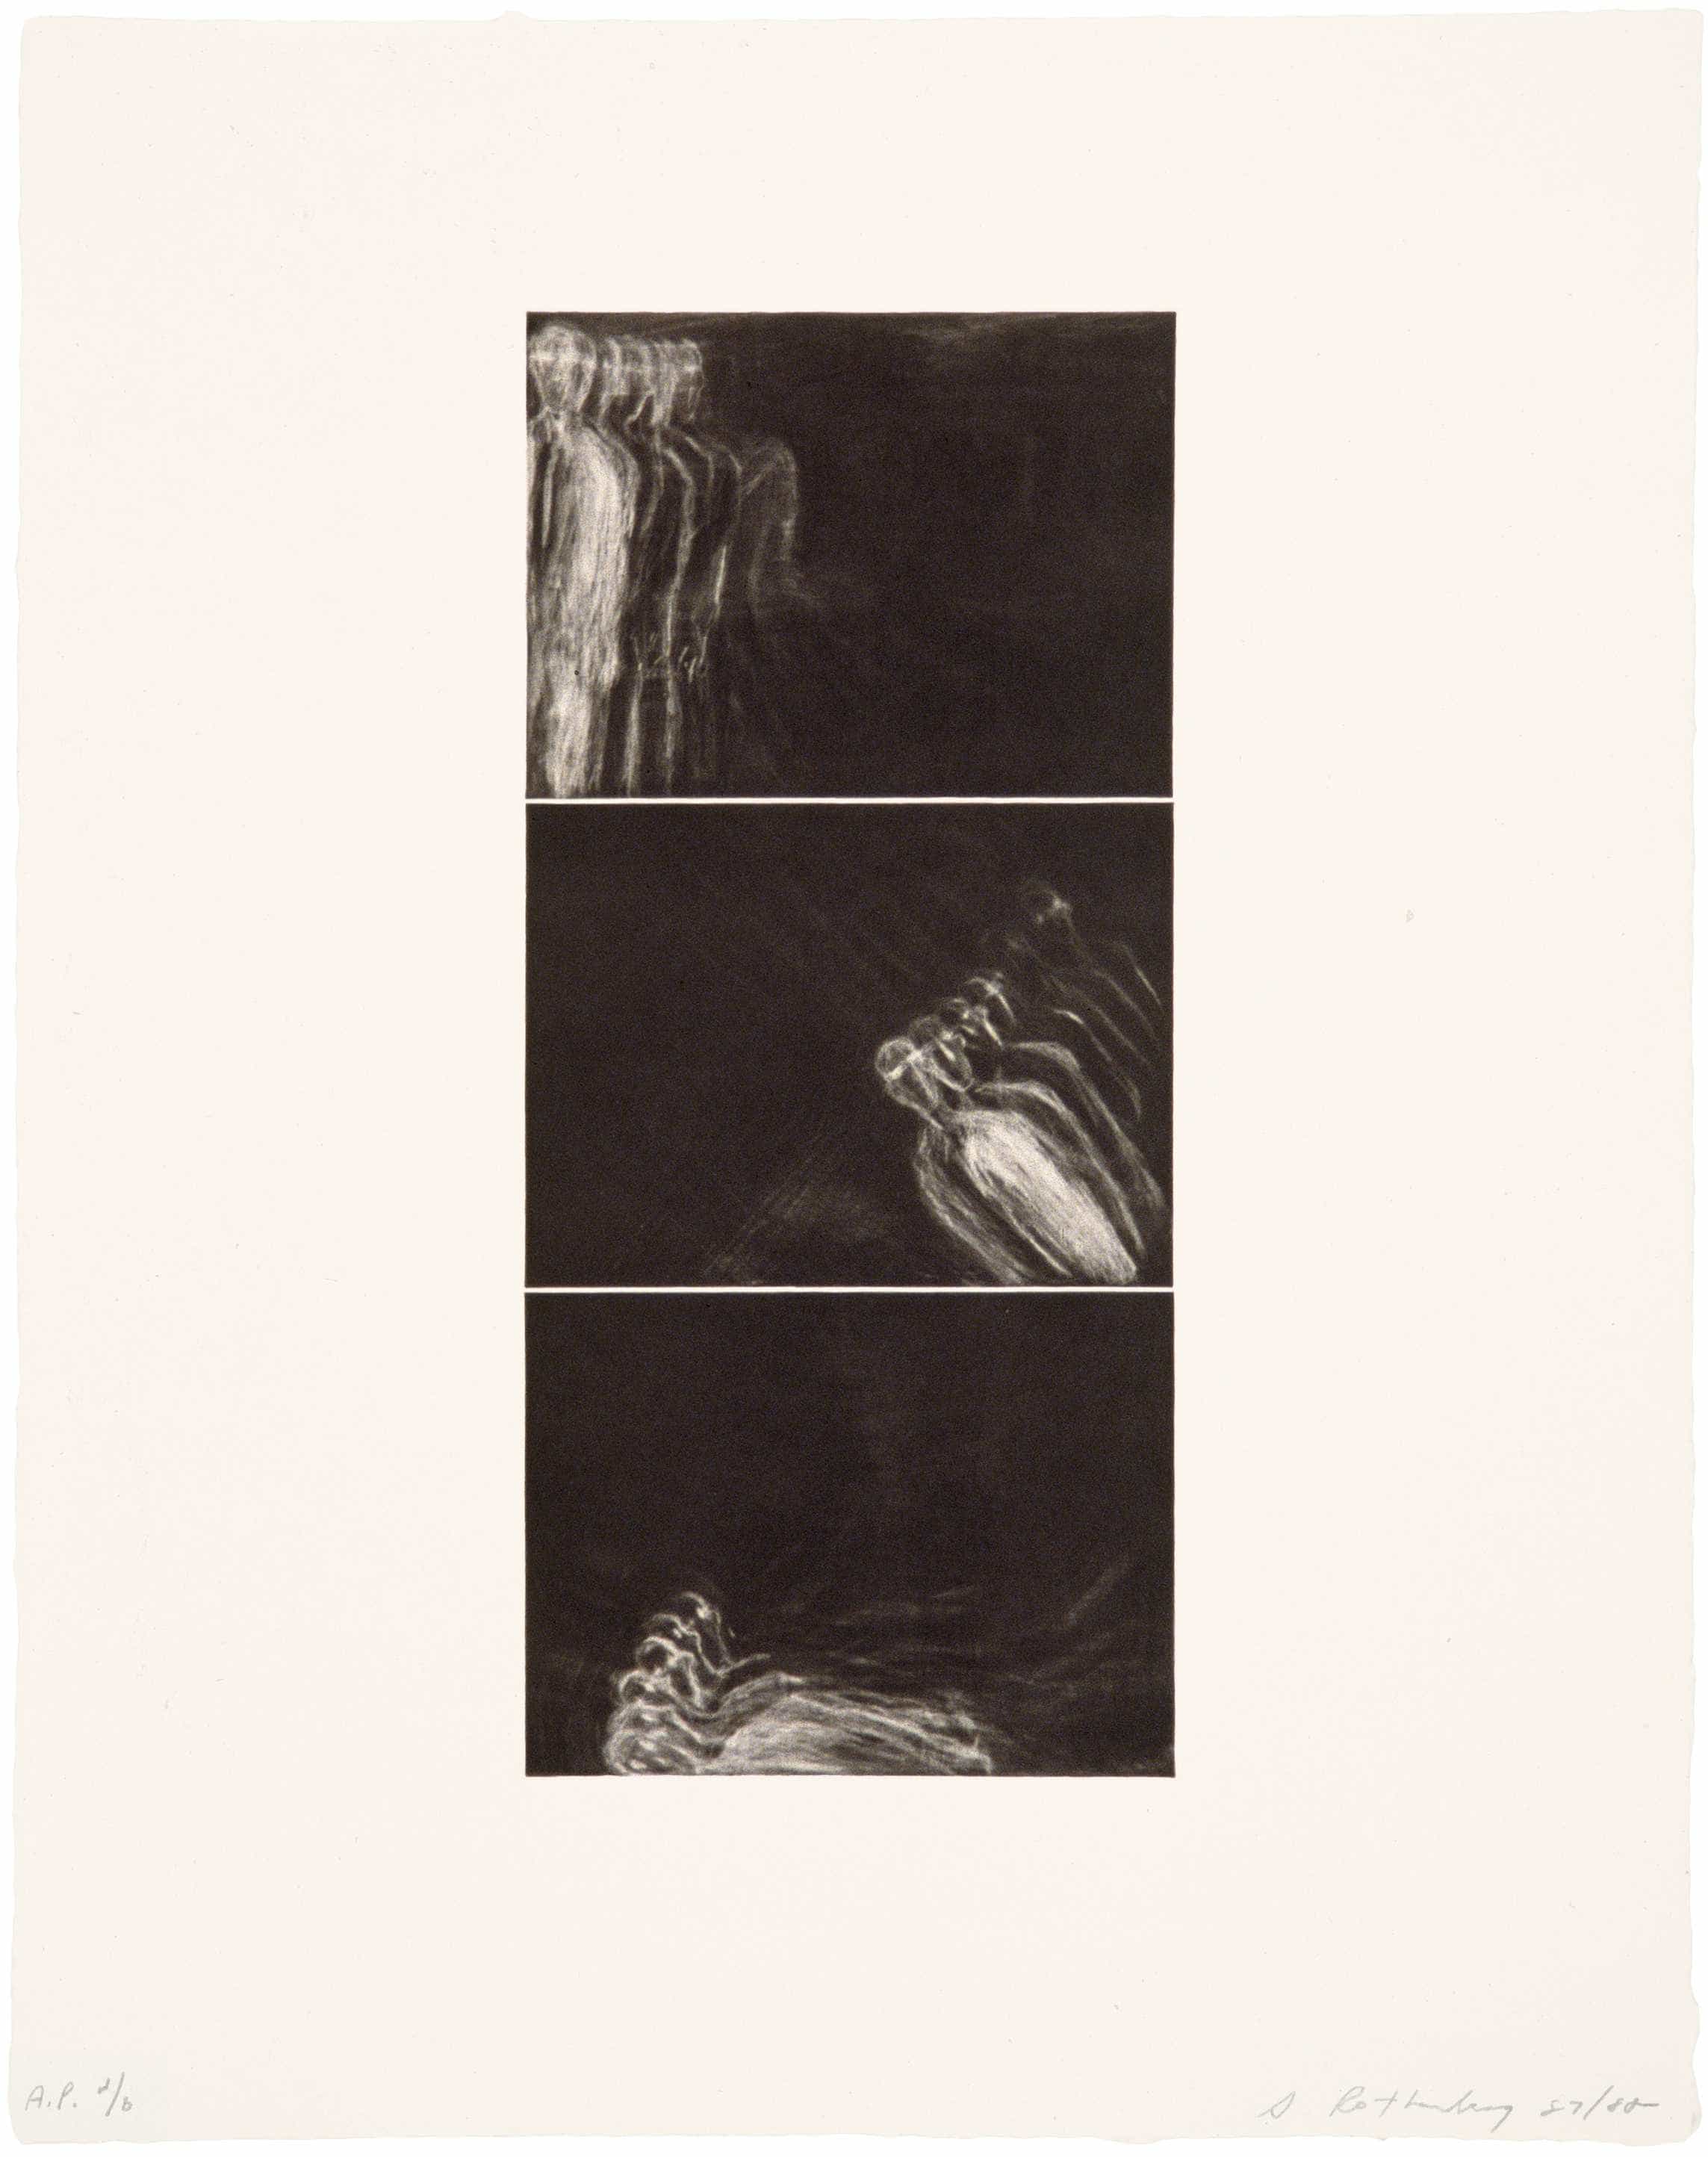 Susan Rothenberg, Three Parts, 1987-88